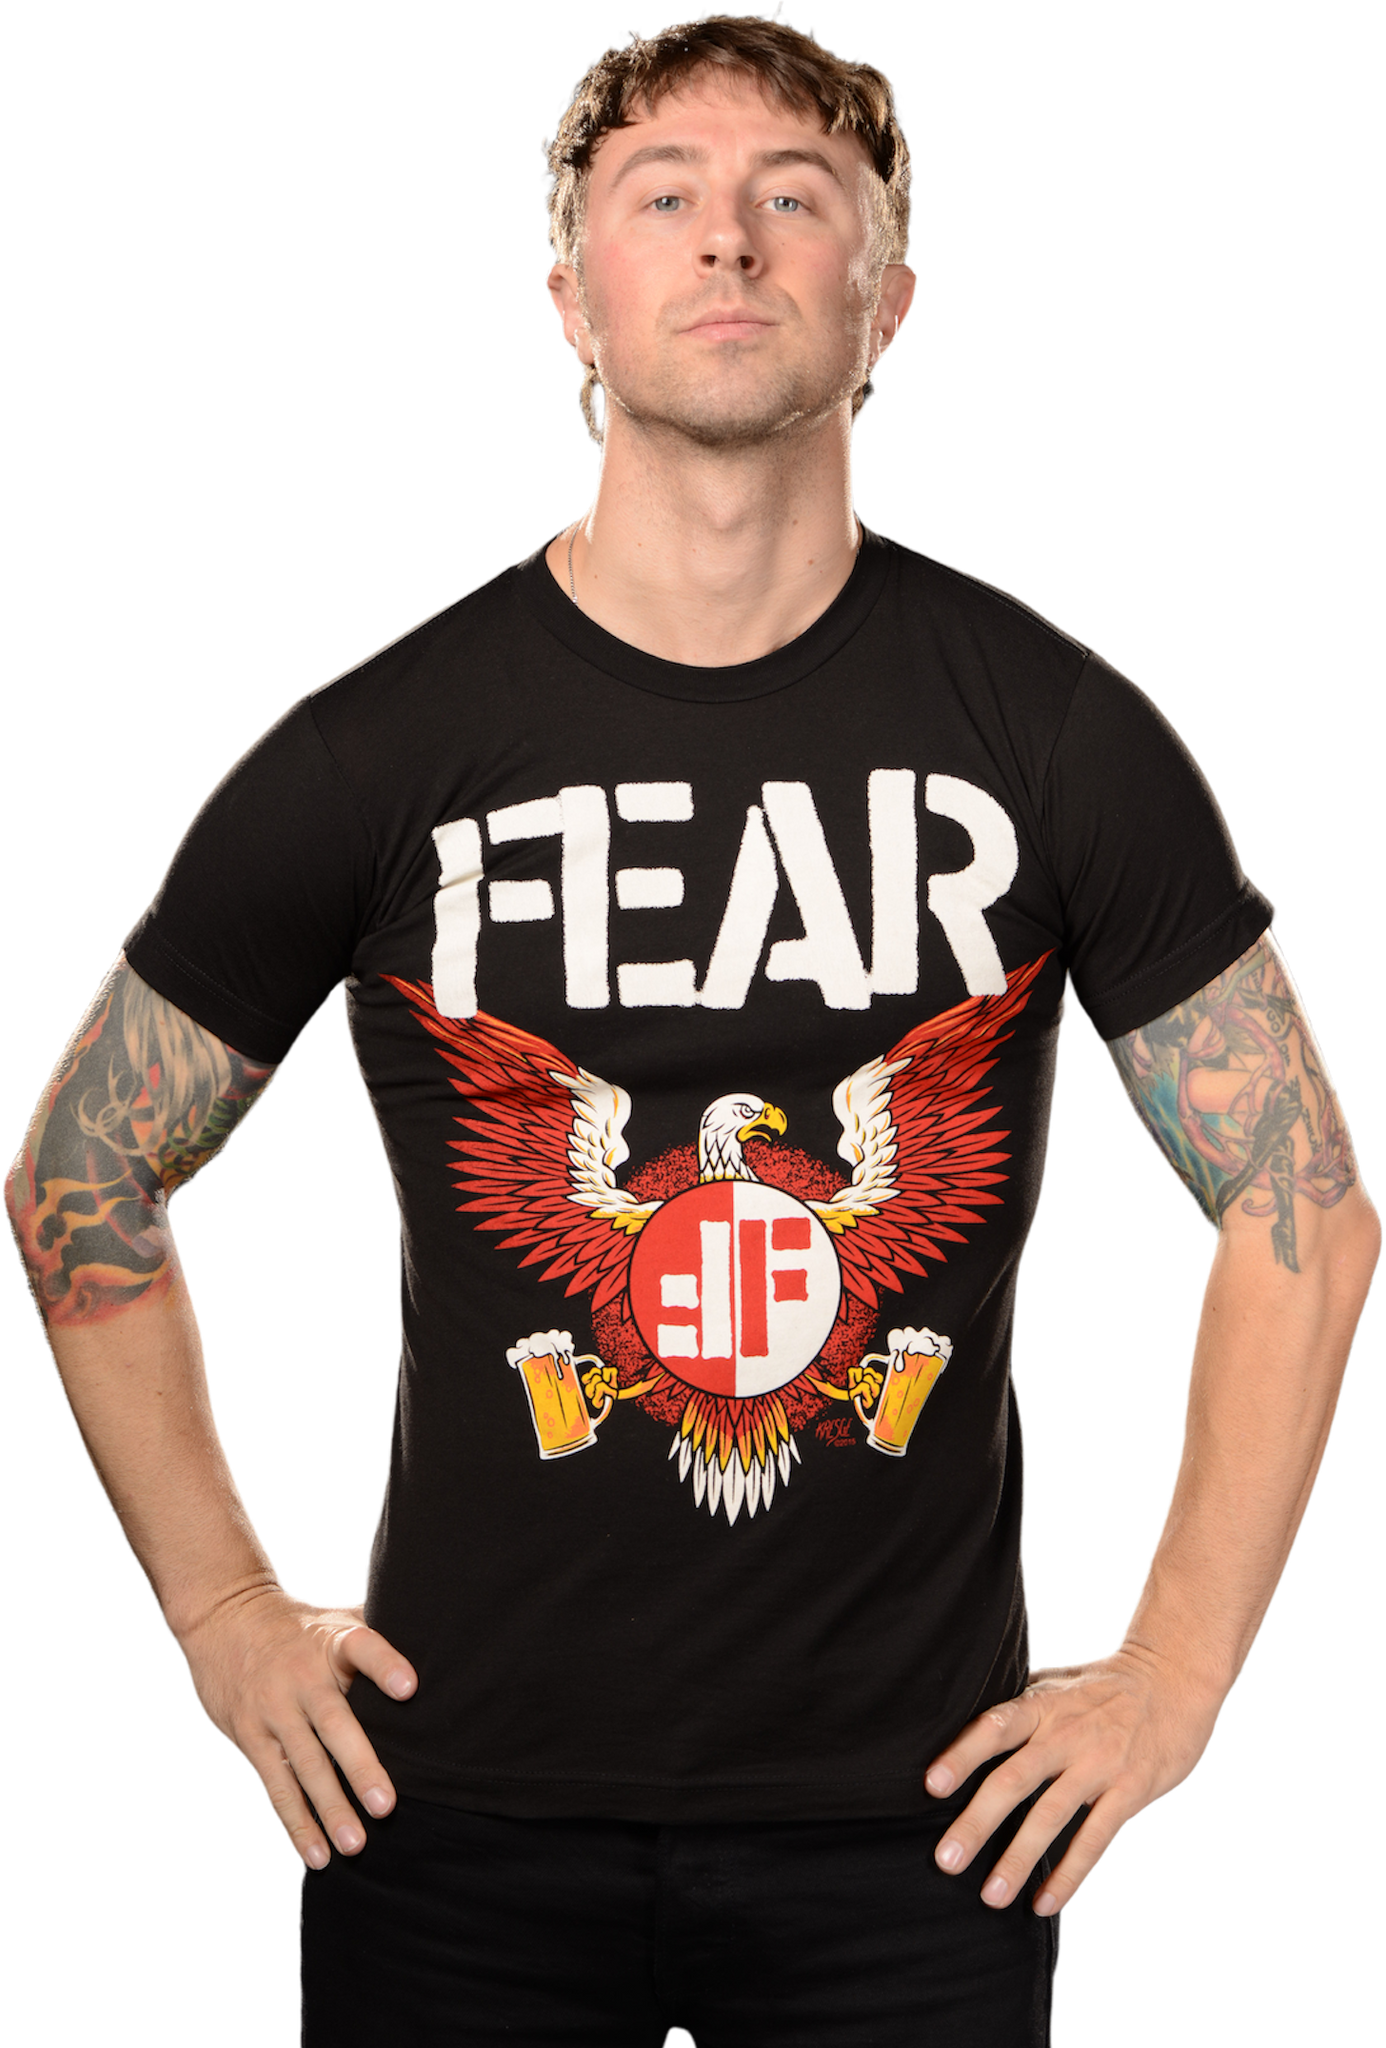 FEAR: "BEER EAGLE" T-SHIRT